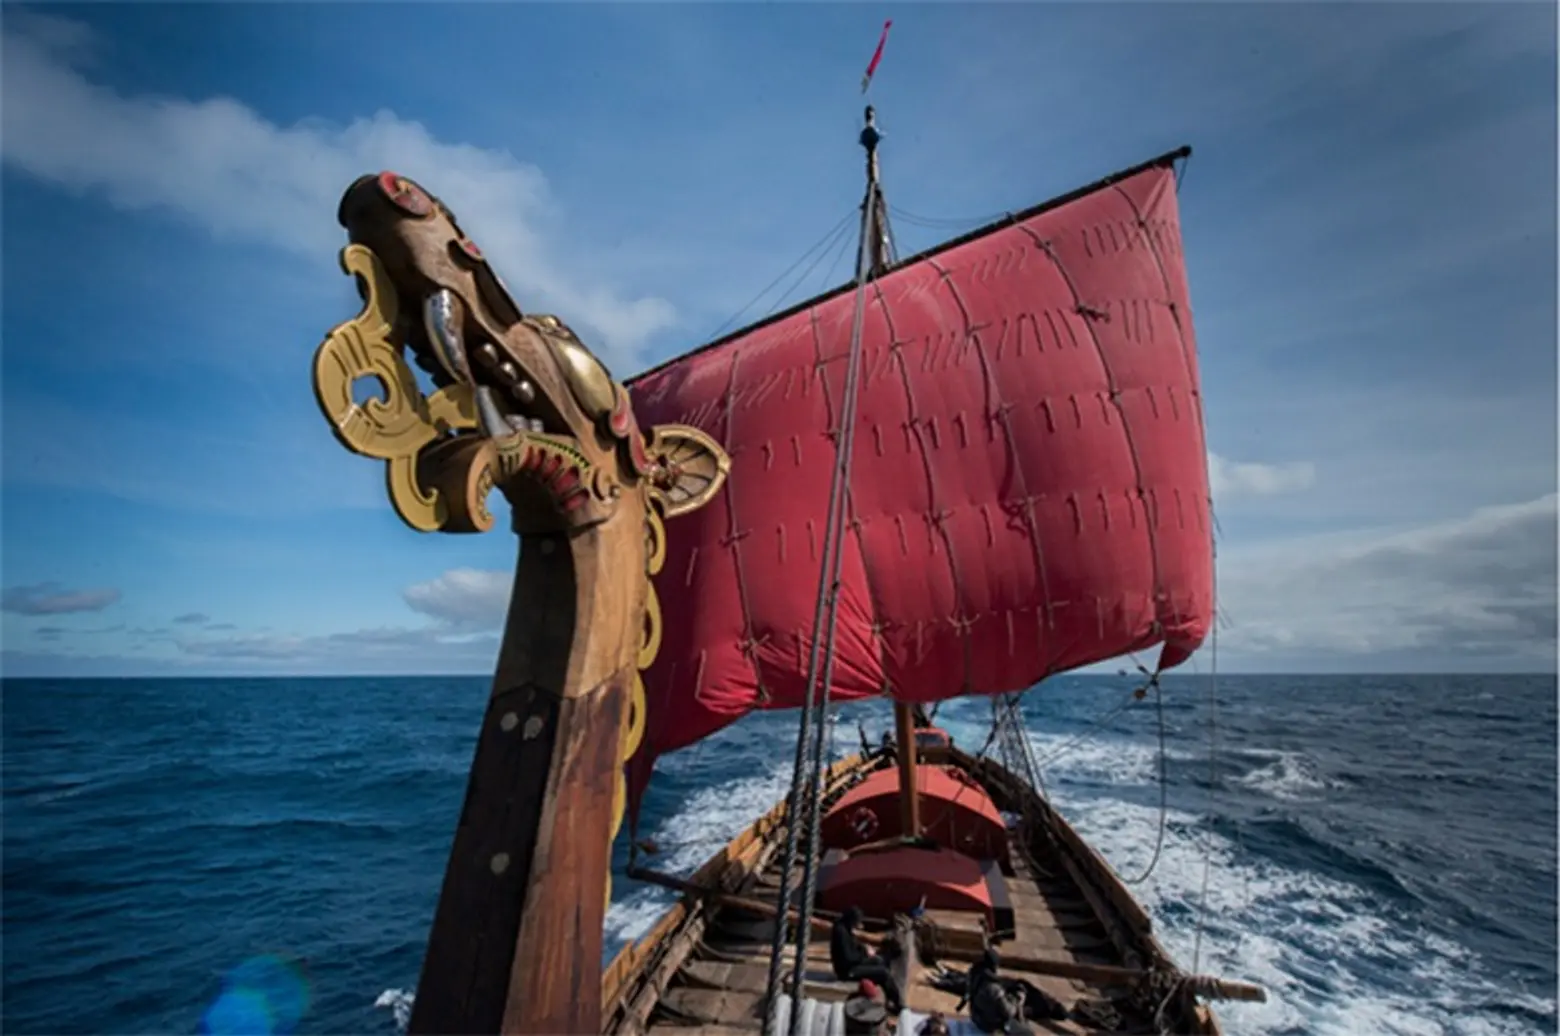 The-Draken-Harald-Harfagre-viking-ship